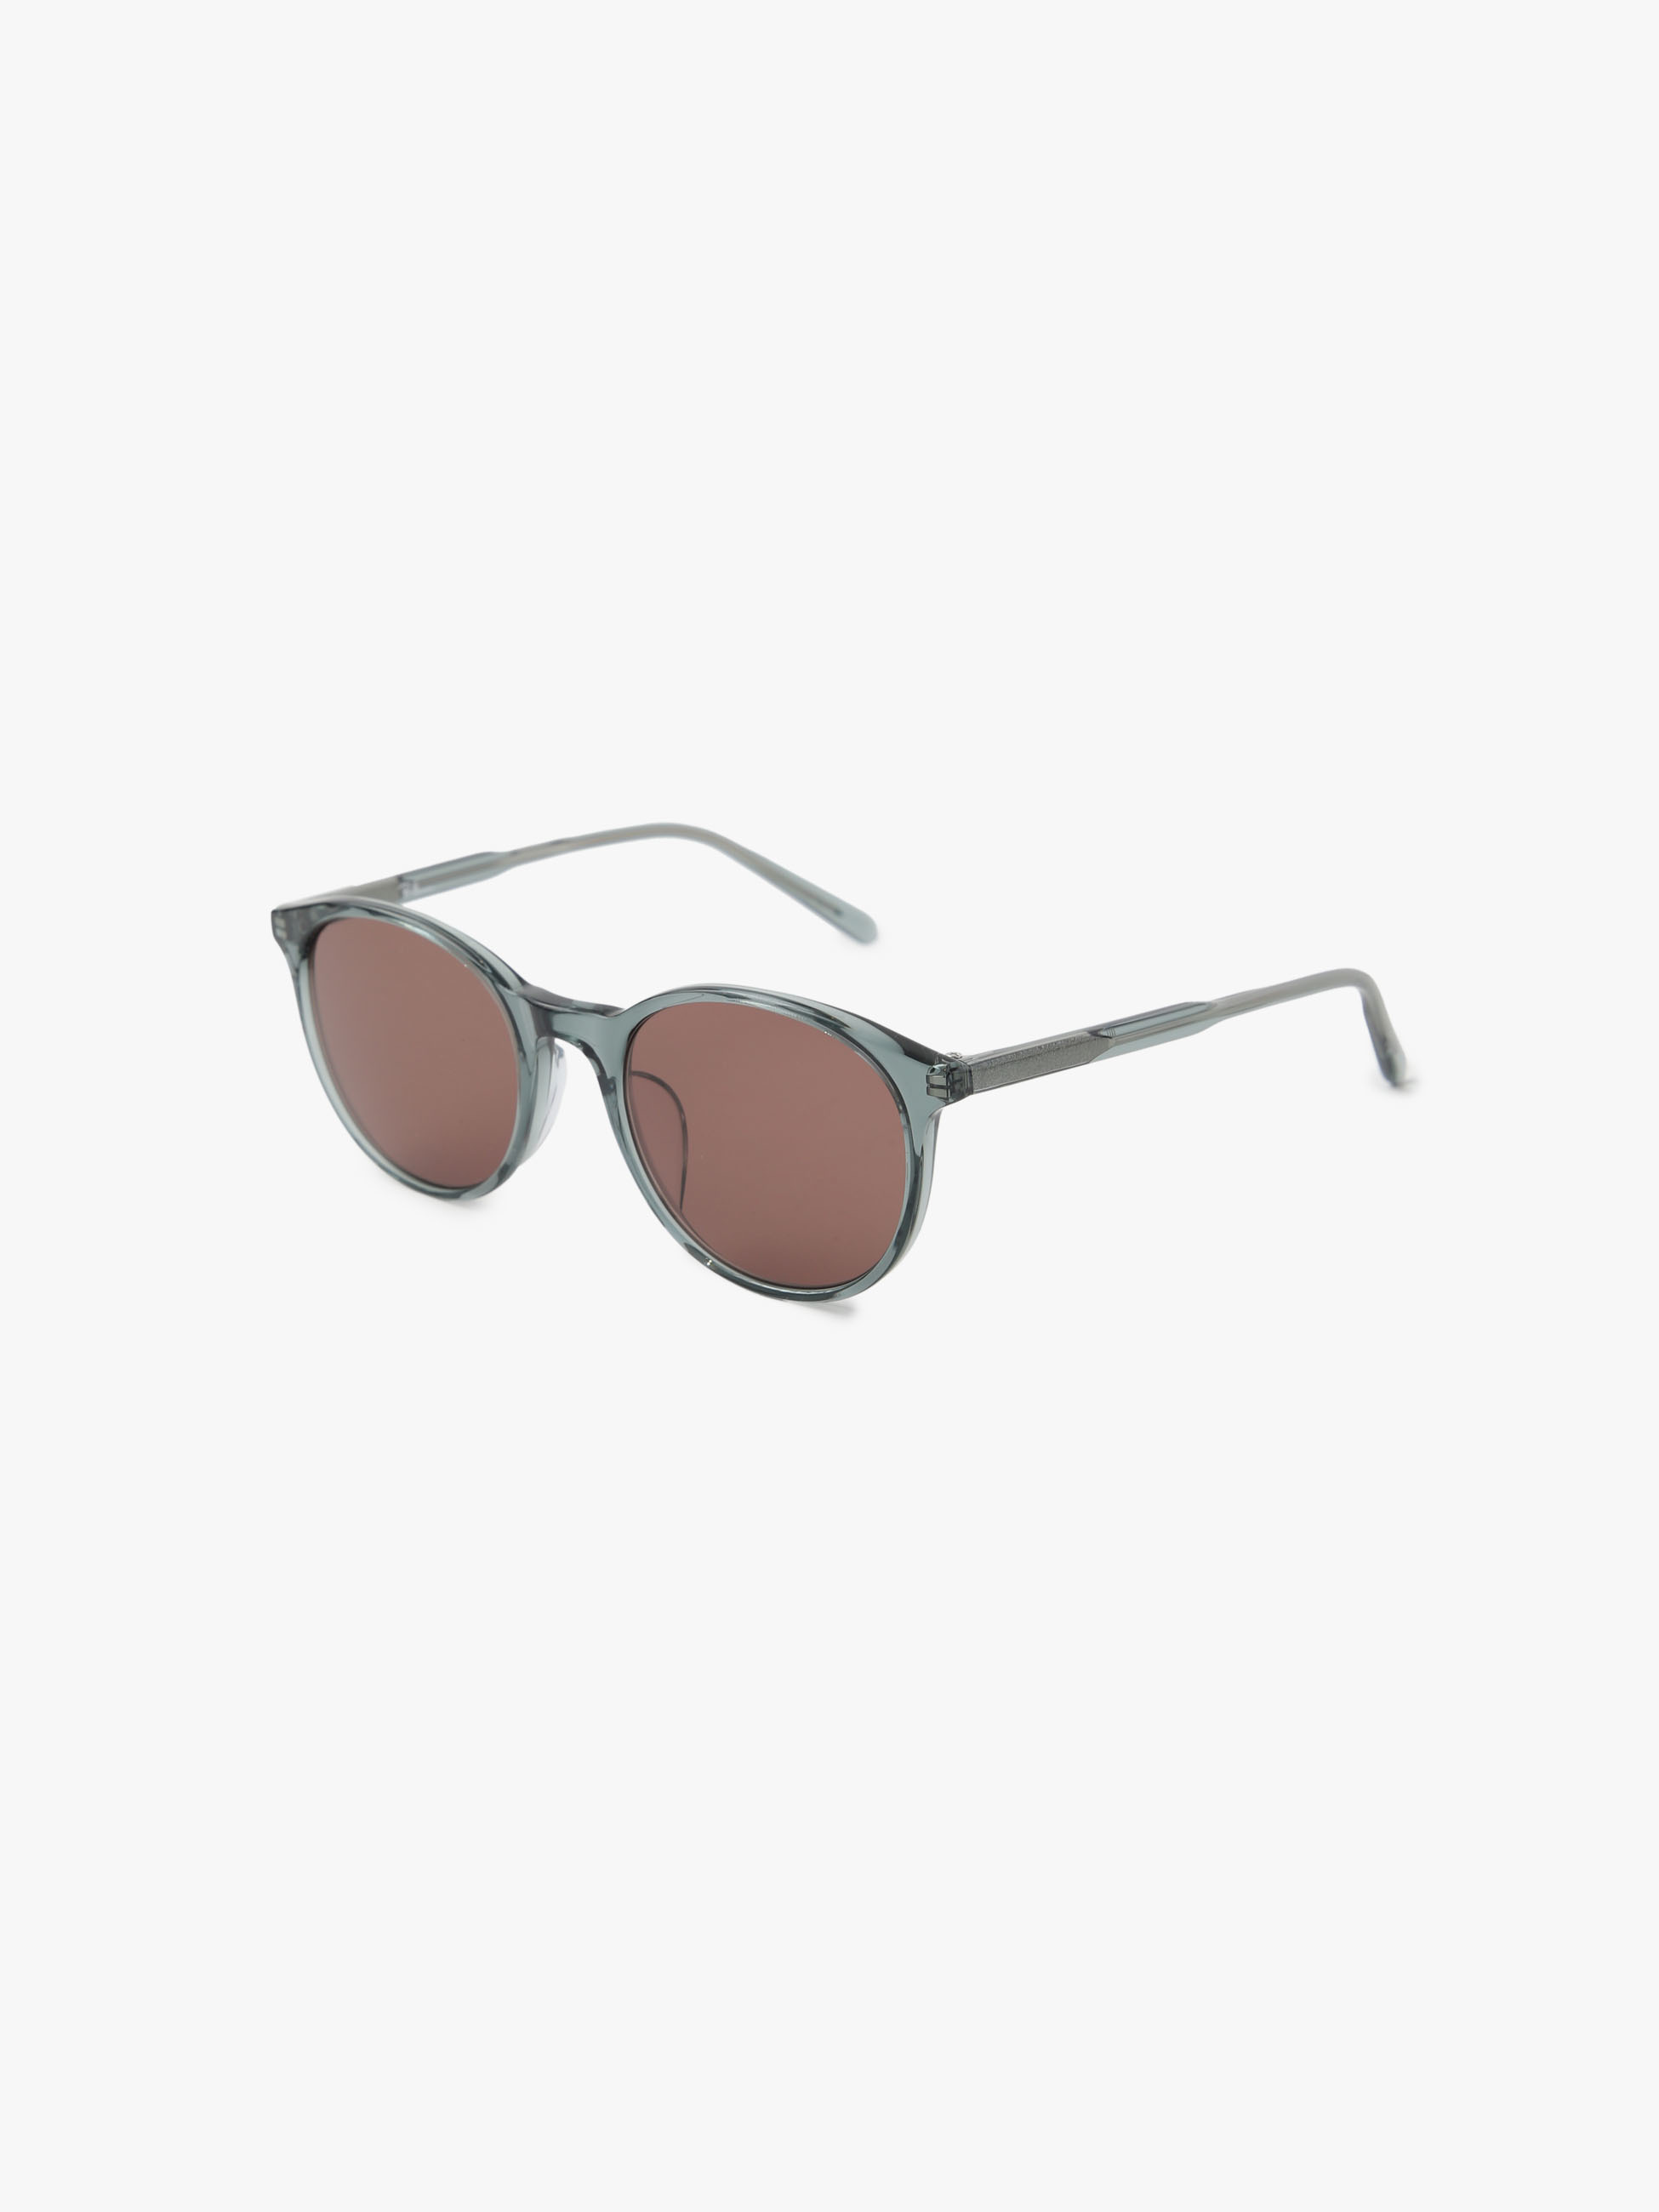 New Boston Sunglasses (Khaki)｜Ron Herman(ロンハーマン)｜Ron Herman